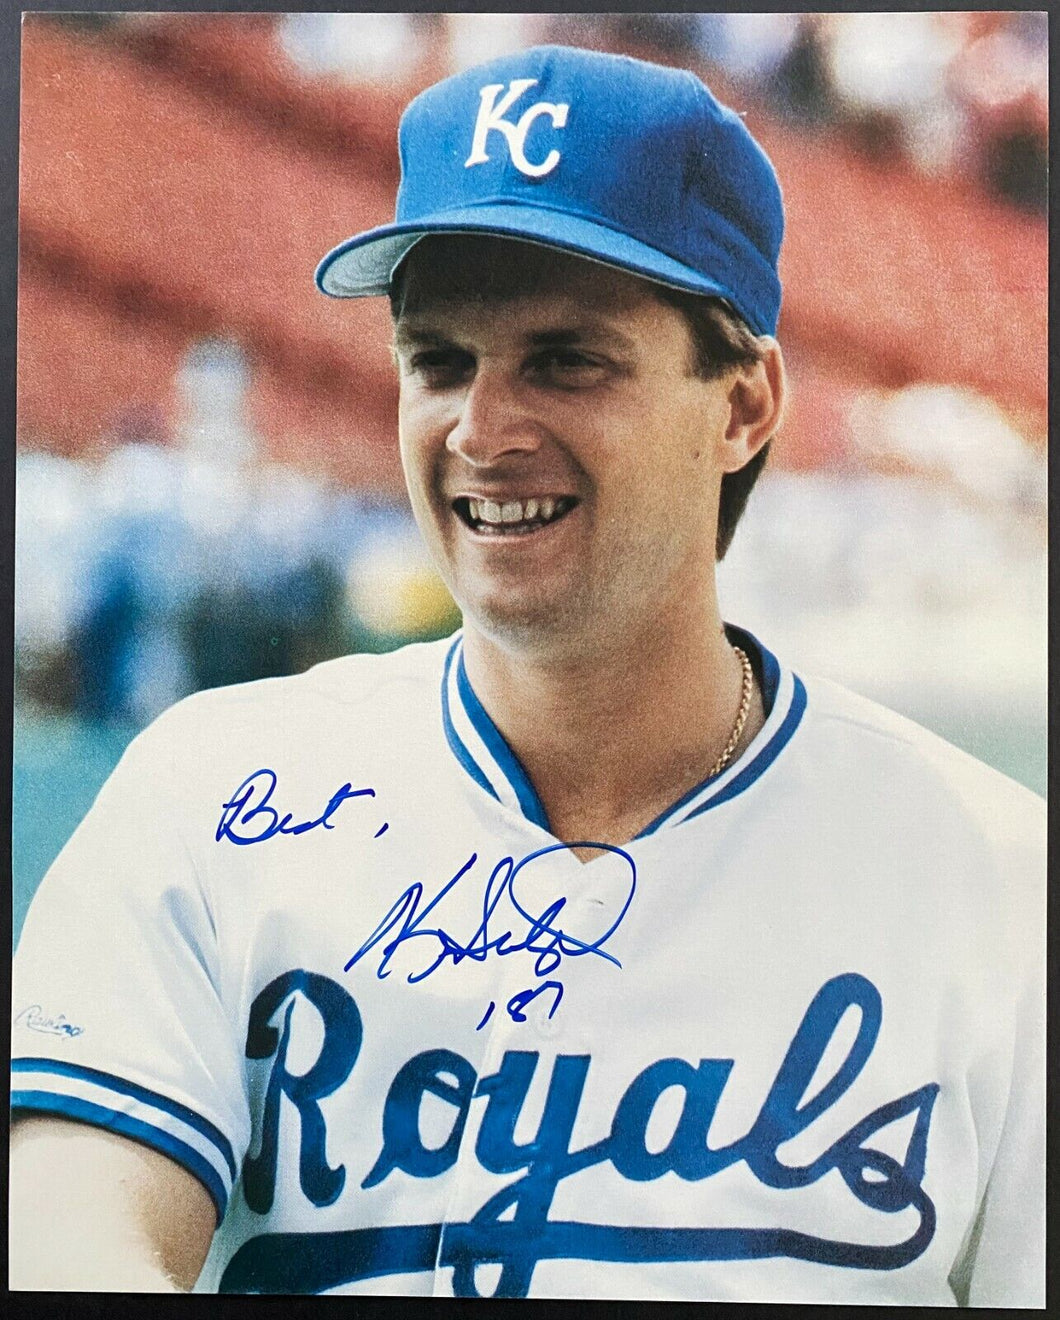 1987 Vintage Signed MLB Kansas City Royals Kevin Seitzer Autographed Photo